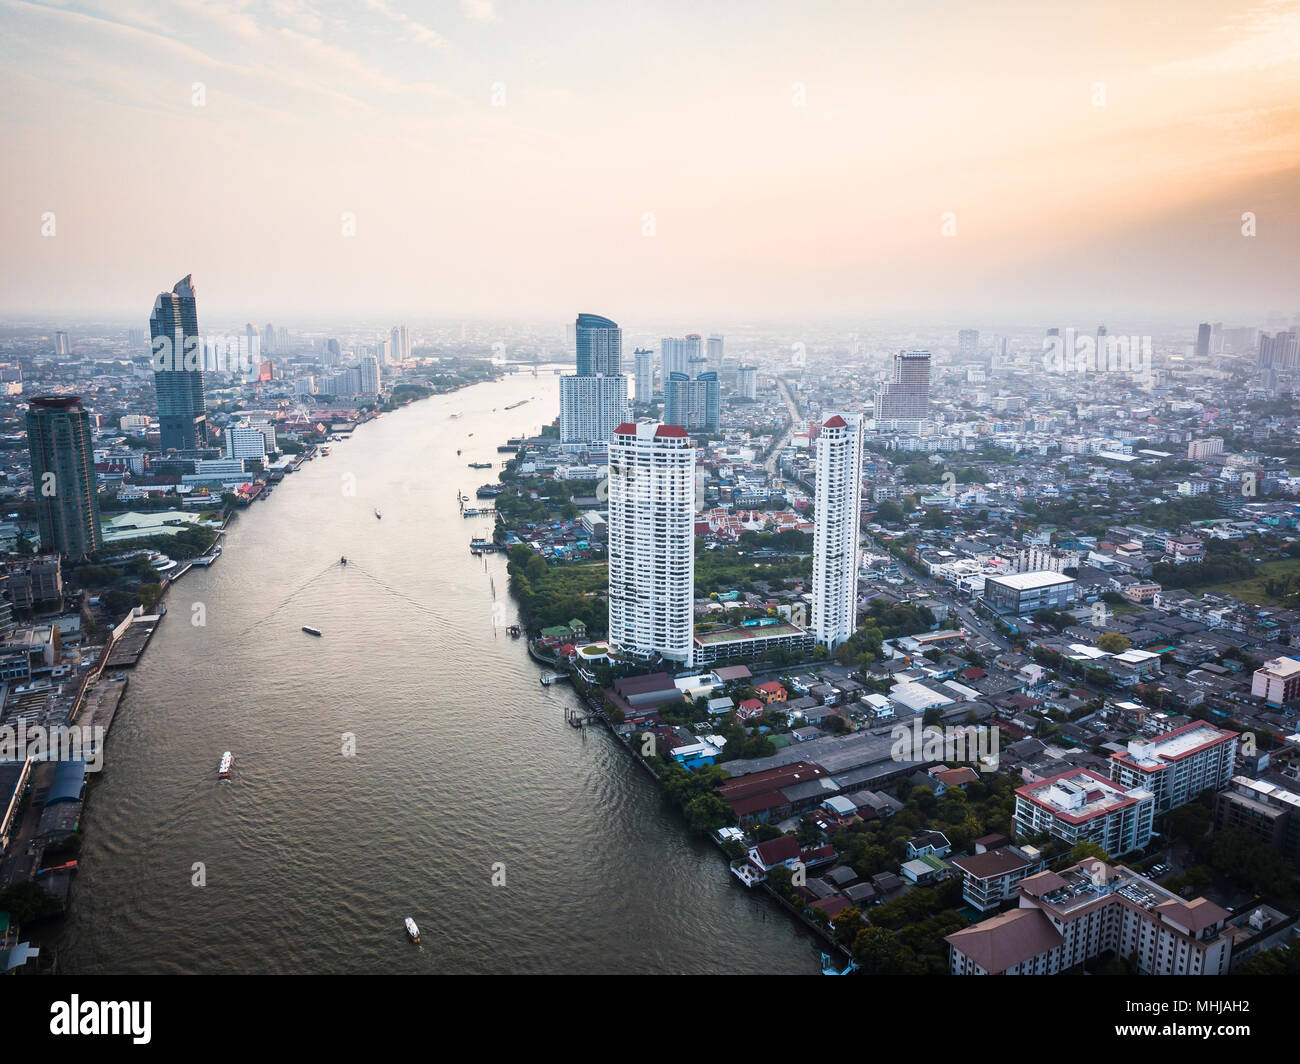 Bangkok capital city of Thailand, drone photograph. Stock Photo